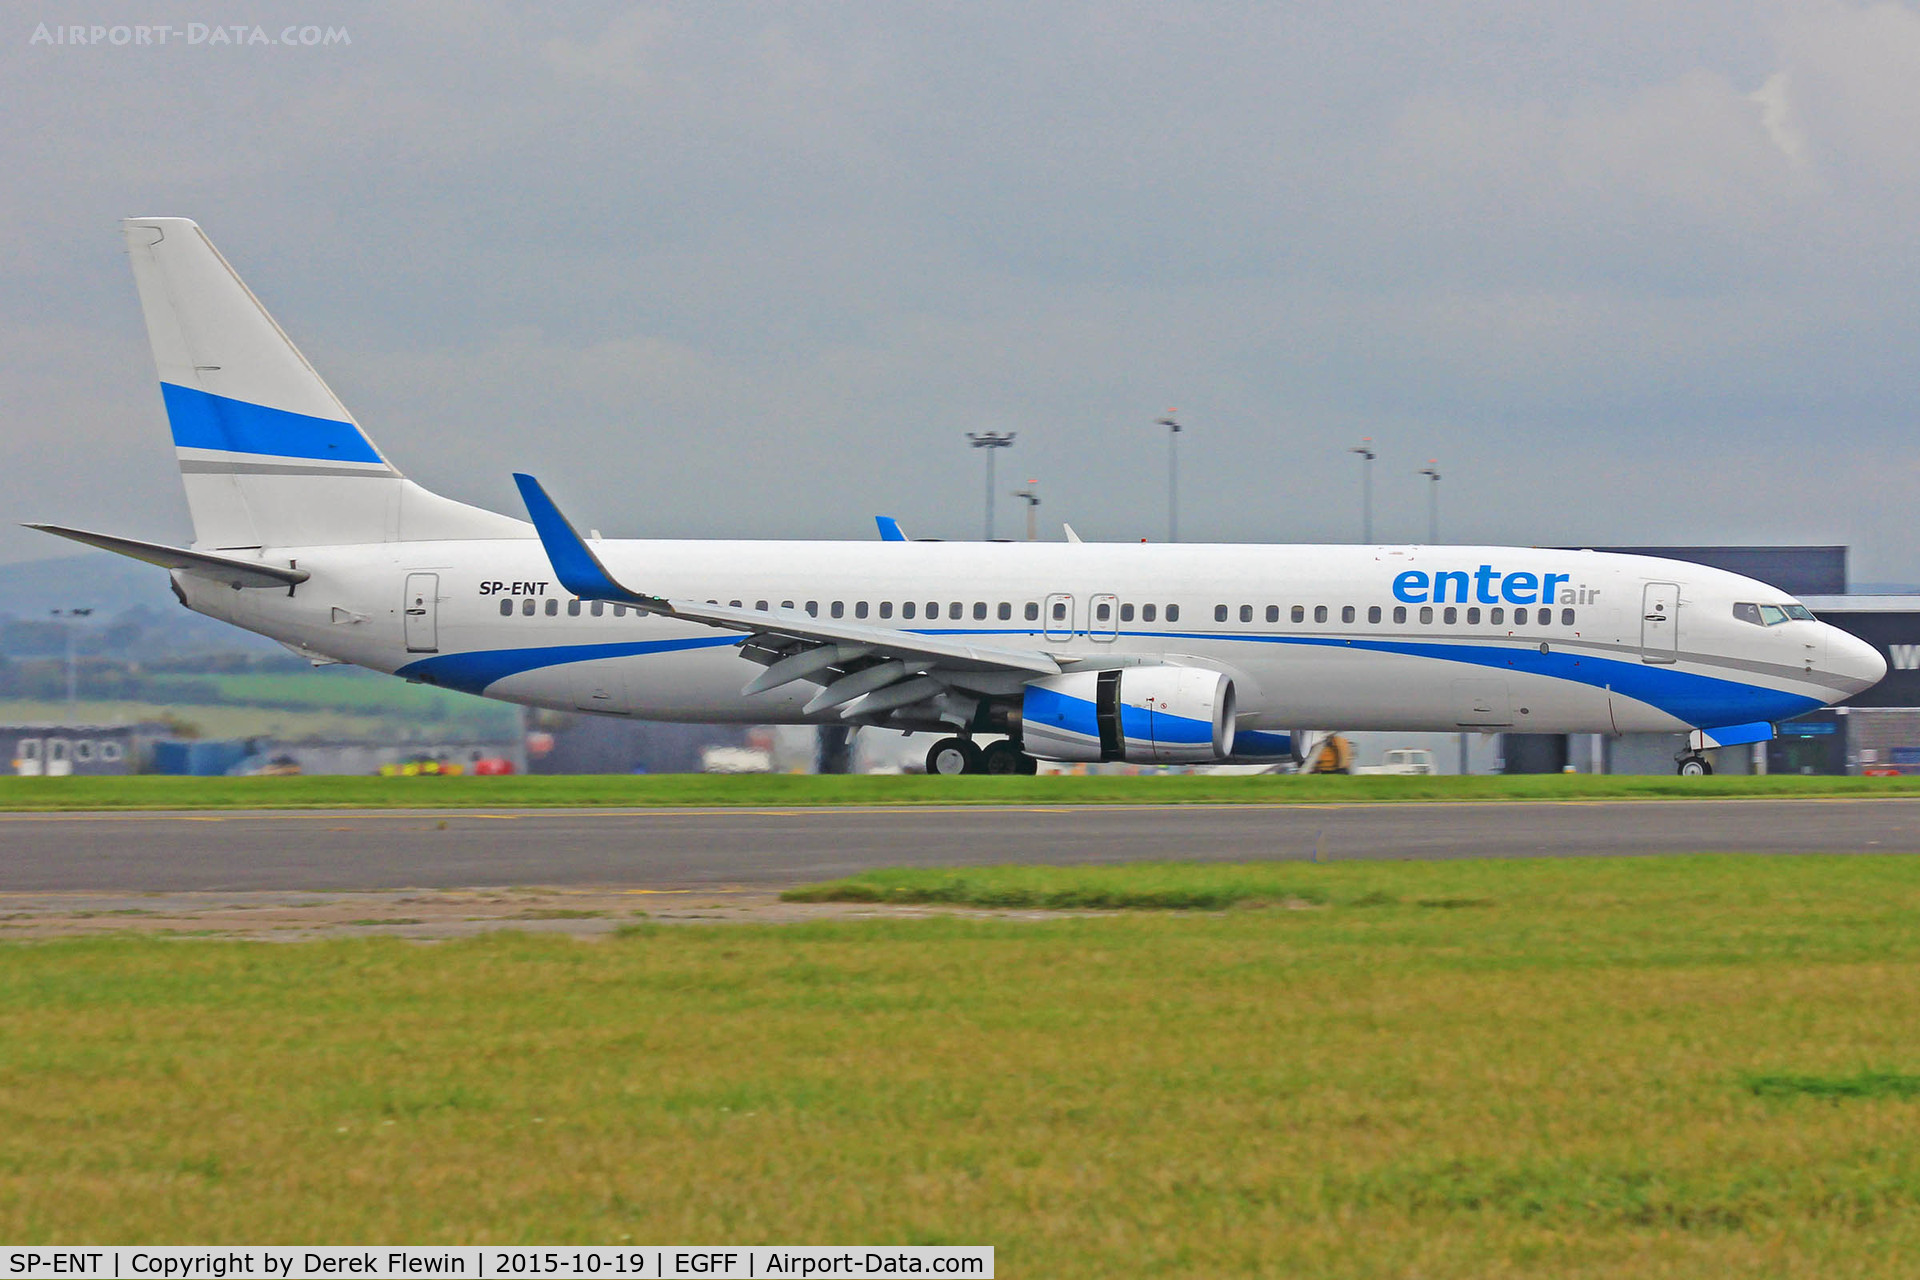 SP-ENT, 2000 Boeing 737-8AS C/N 29926, 737-8AS, Warsaw based, call sign Enterair 532P, previously N1786B, EI-CSM, VR-BIB, VT-SGO, M-ABGY, seen landing on runway 12, out of Dublin.